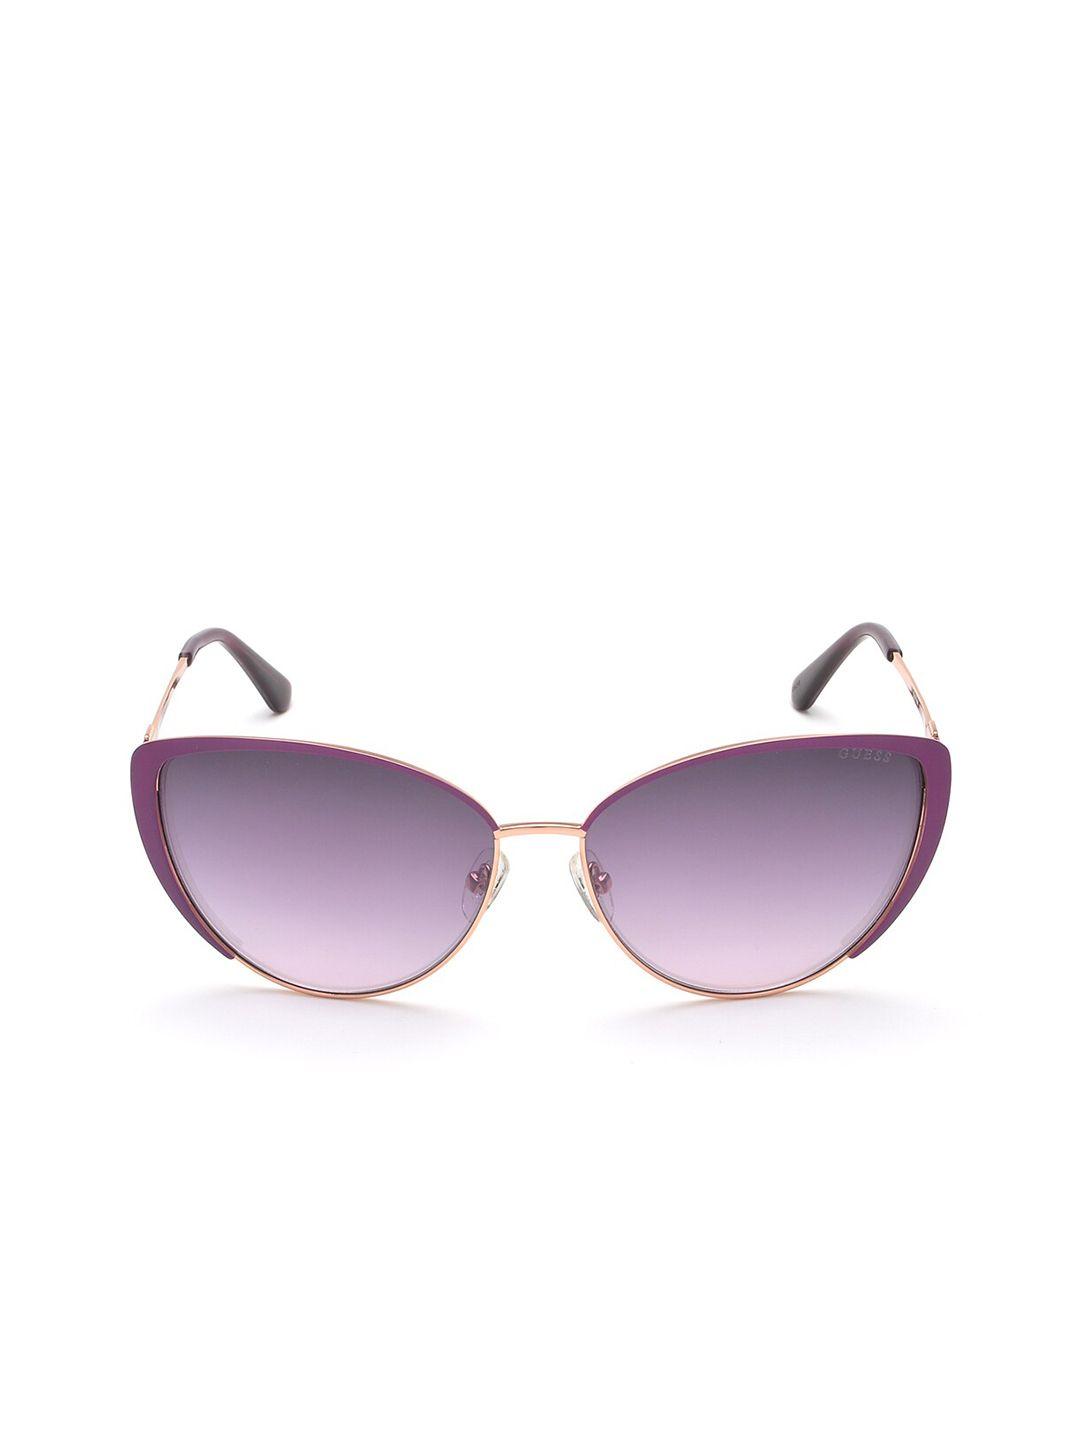 guess-women-purple-cateye-sunglasses-gus77446181zsg